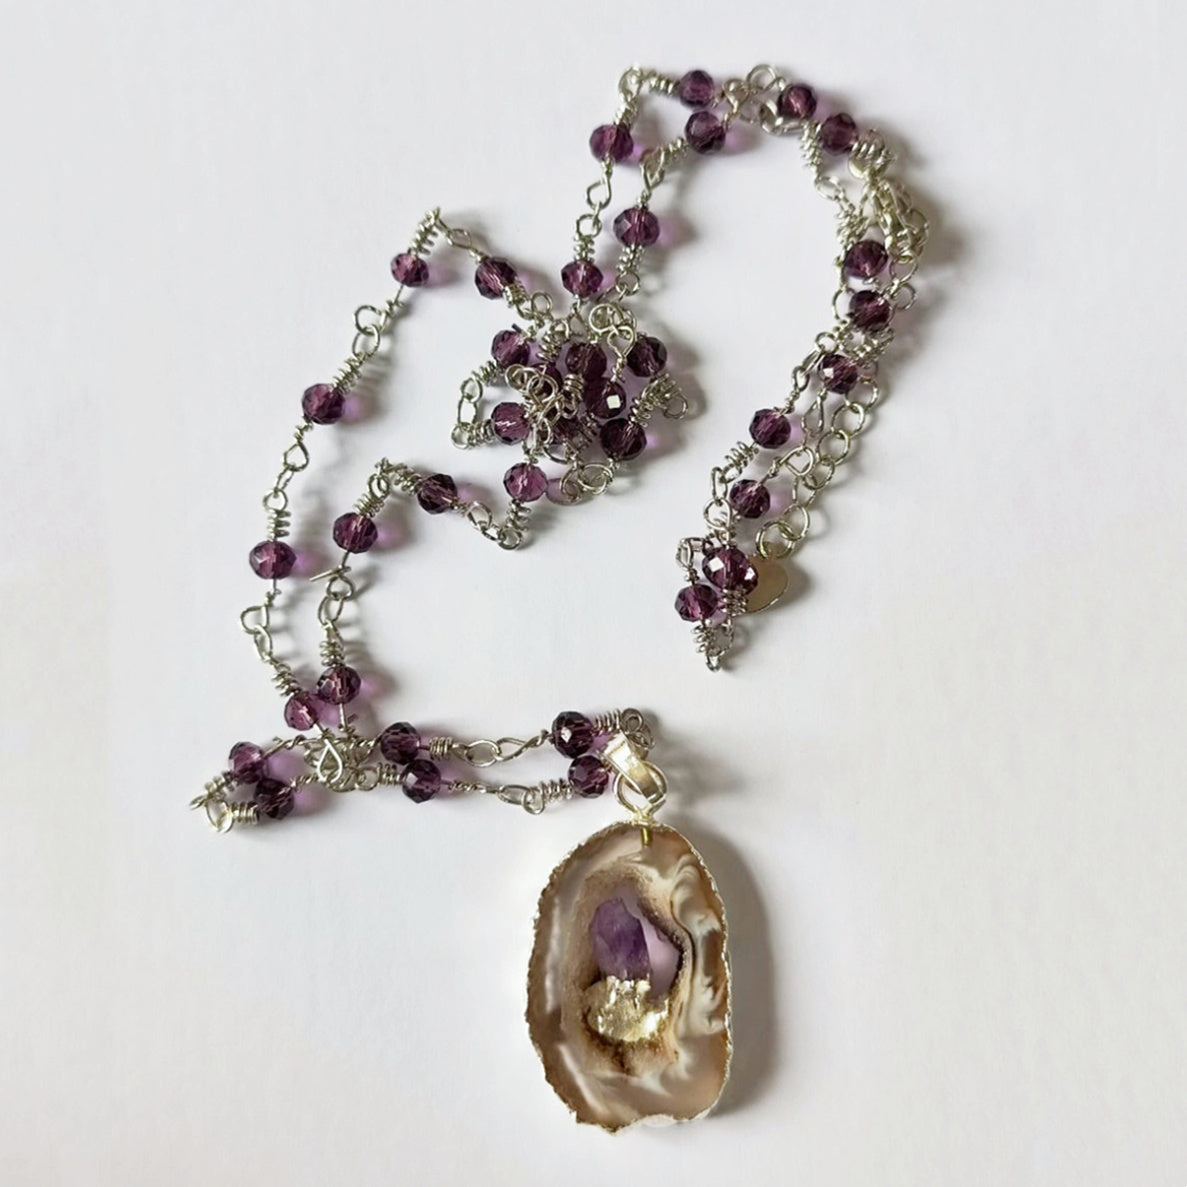 agate druzy slice pendant necklace, amethyt necklace, crystal quartz beaded necklace, silver jewelry, boho jewelry